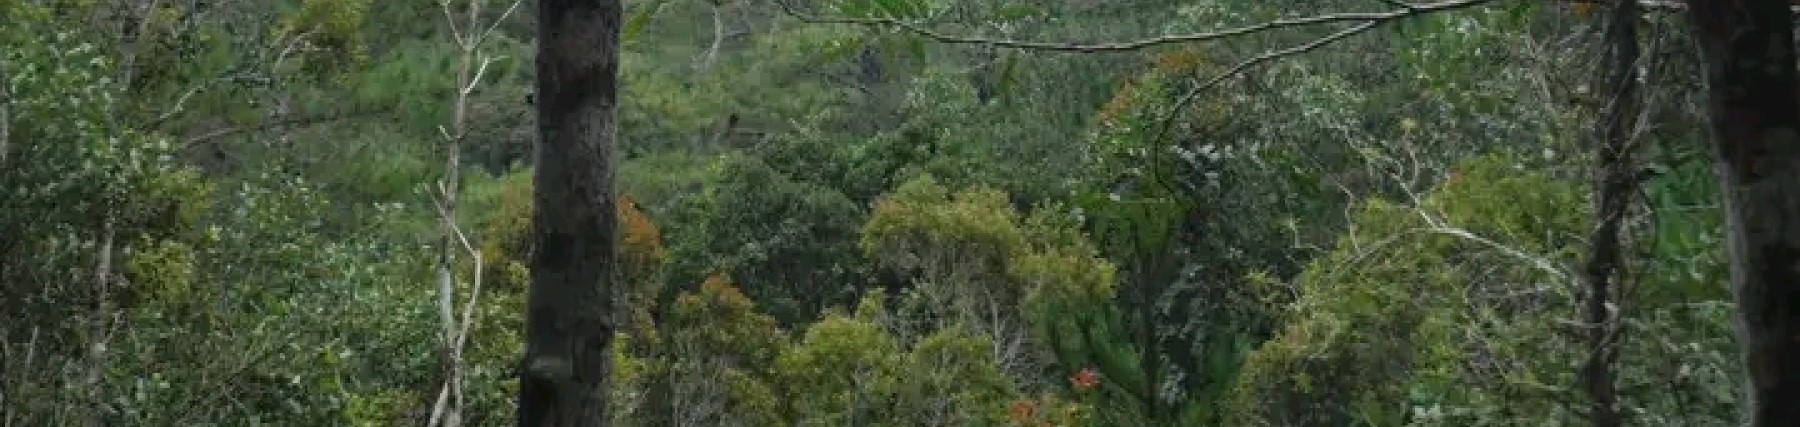 Sibree Dwarf Lemur Habitat